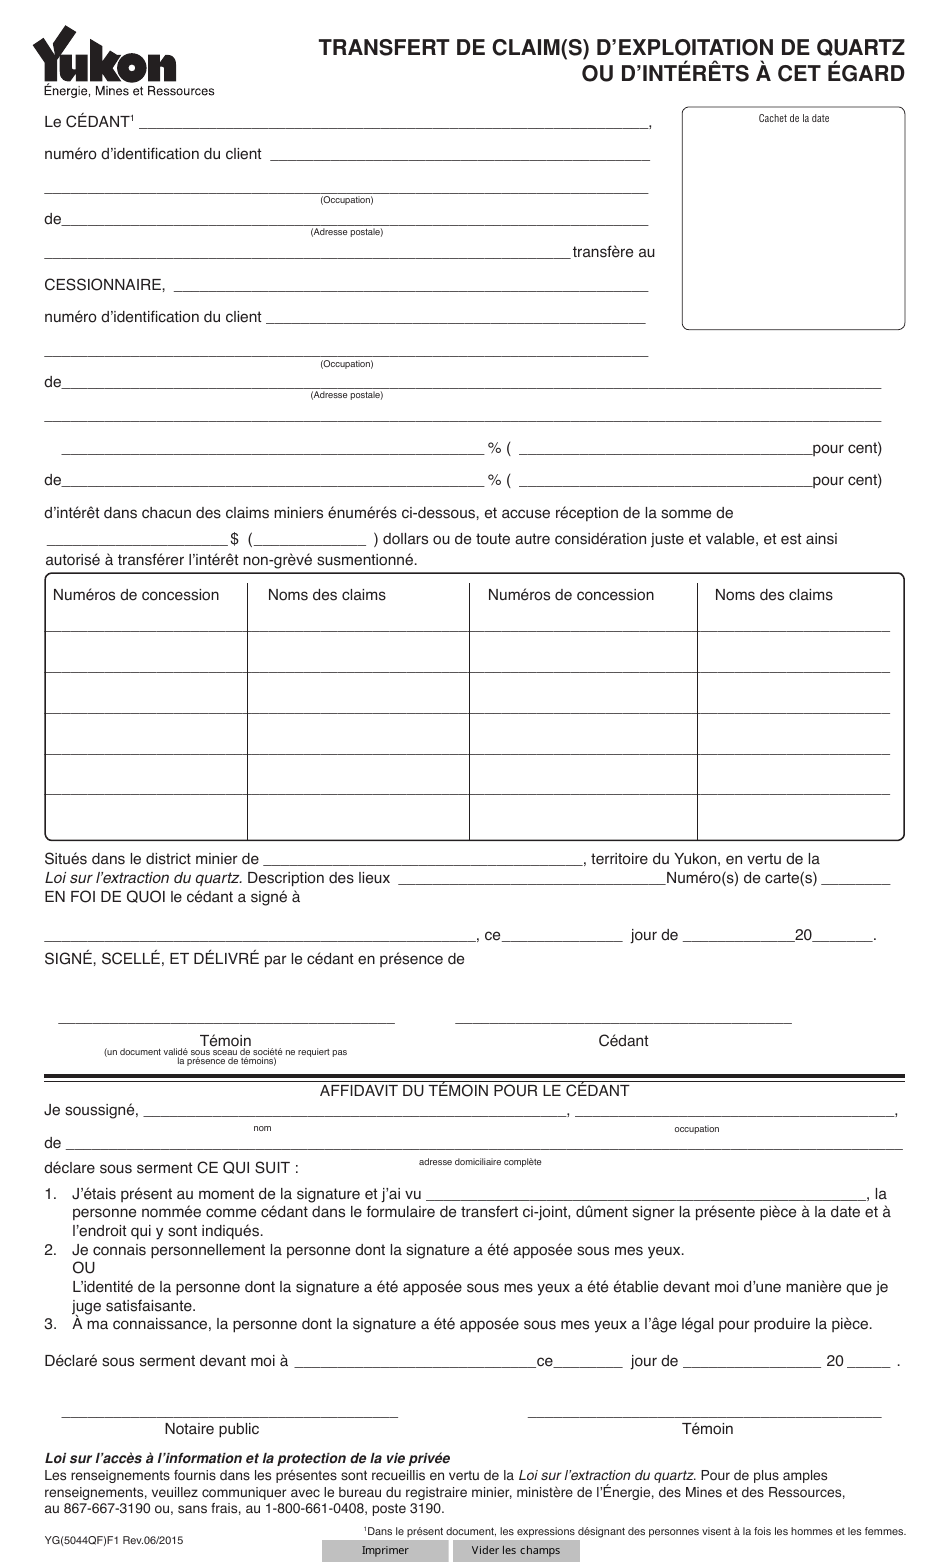 Forme YG5044 Transfert De Claim(S) Dexploitation De Quartz Ou Dinterets a Cet Egard - Yukon, Canada (French), Page 1